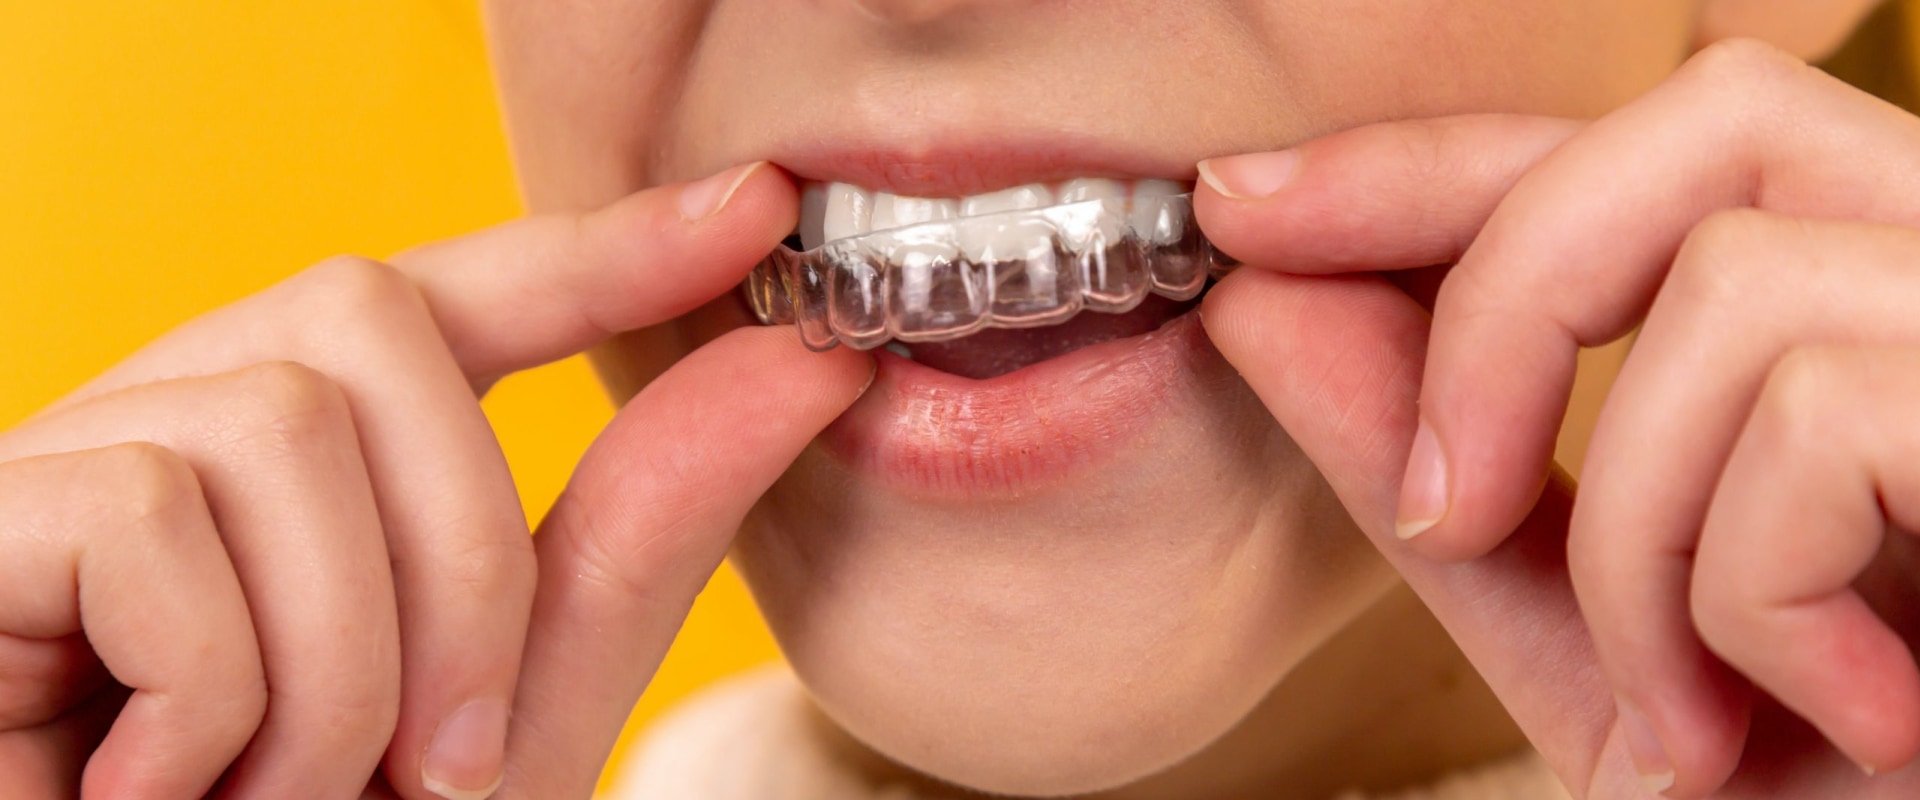 Is invisalign better or better braces?